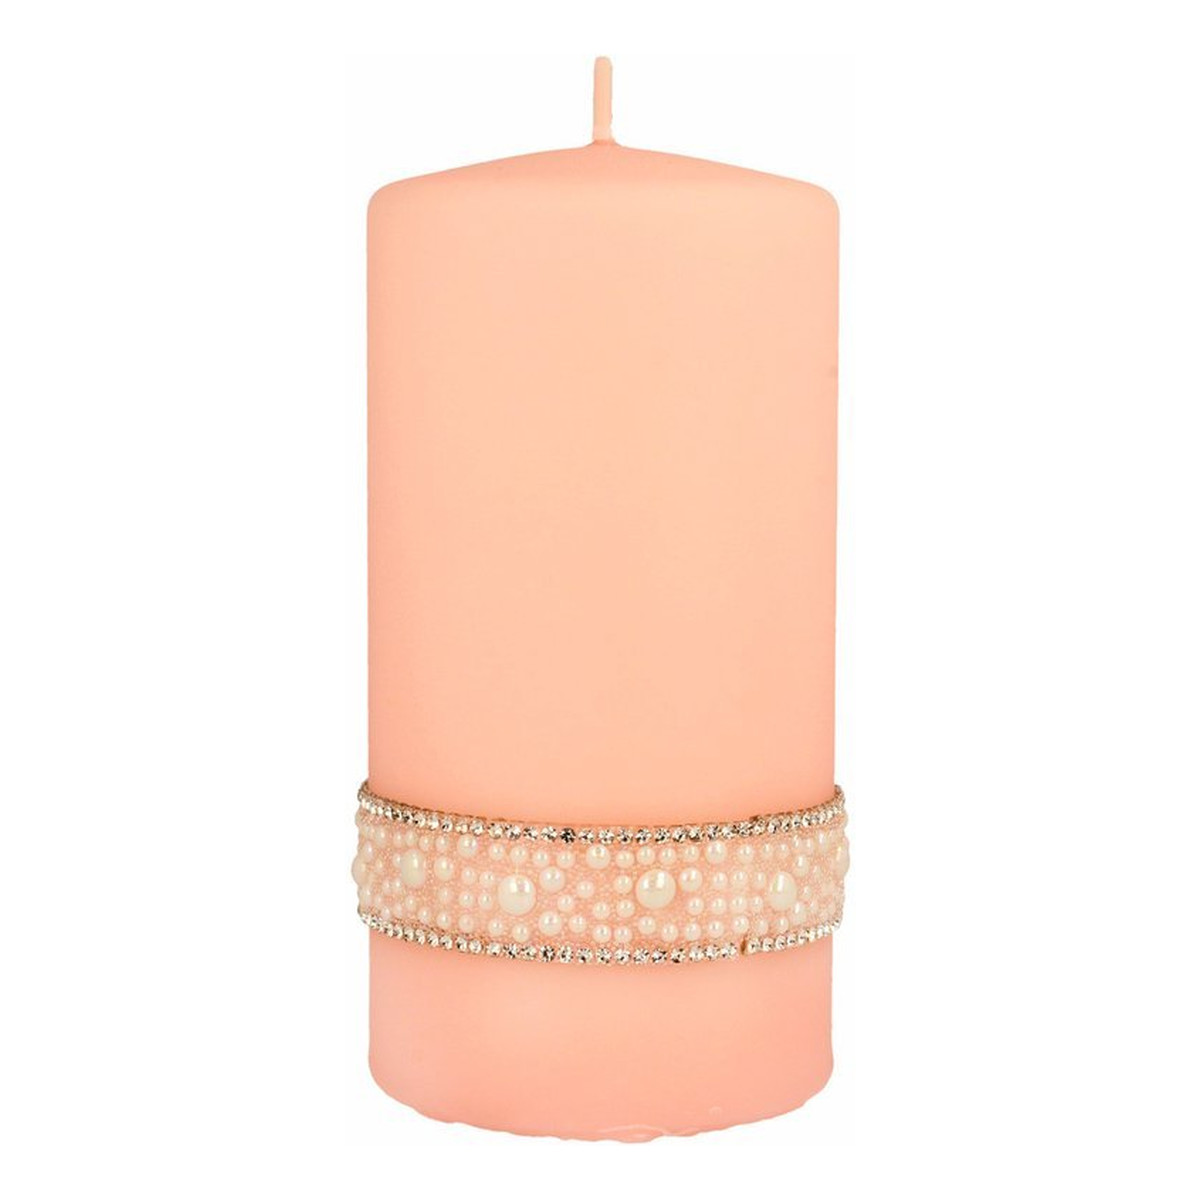 Artman Candles Świeca ozdobna Crystal Pearl rose gold - walec średni